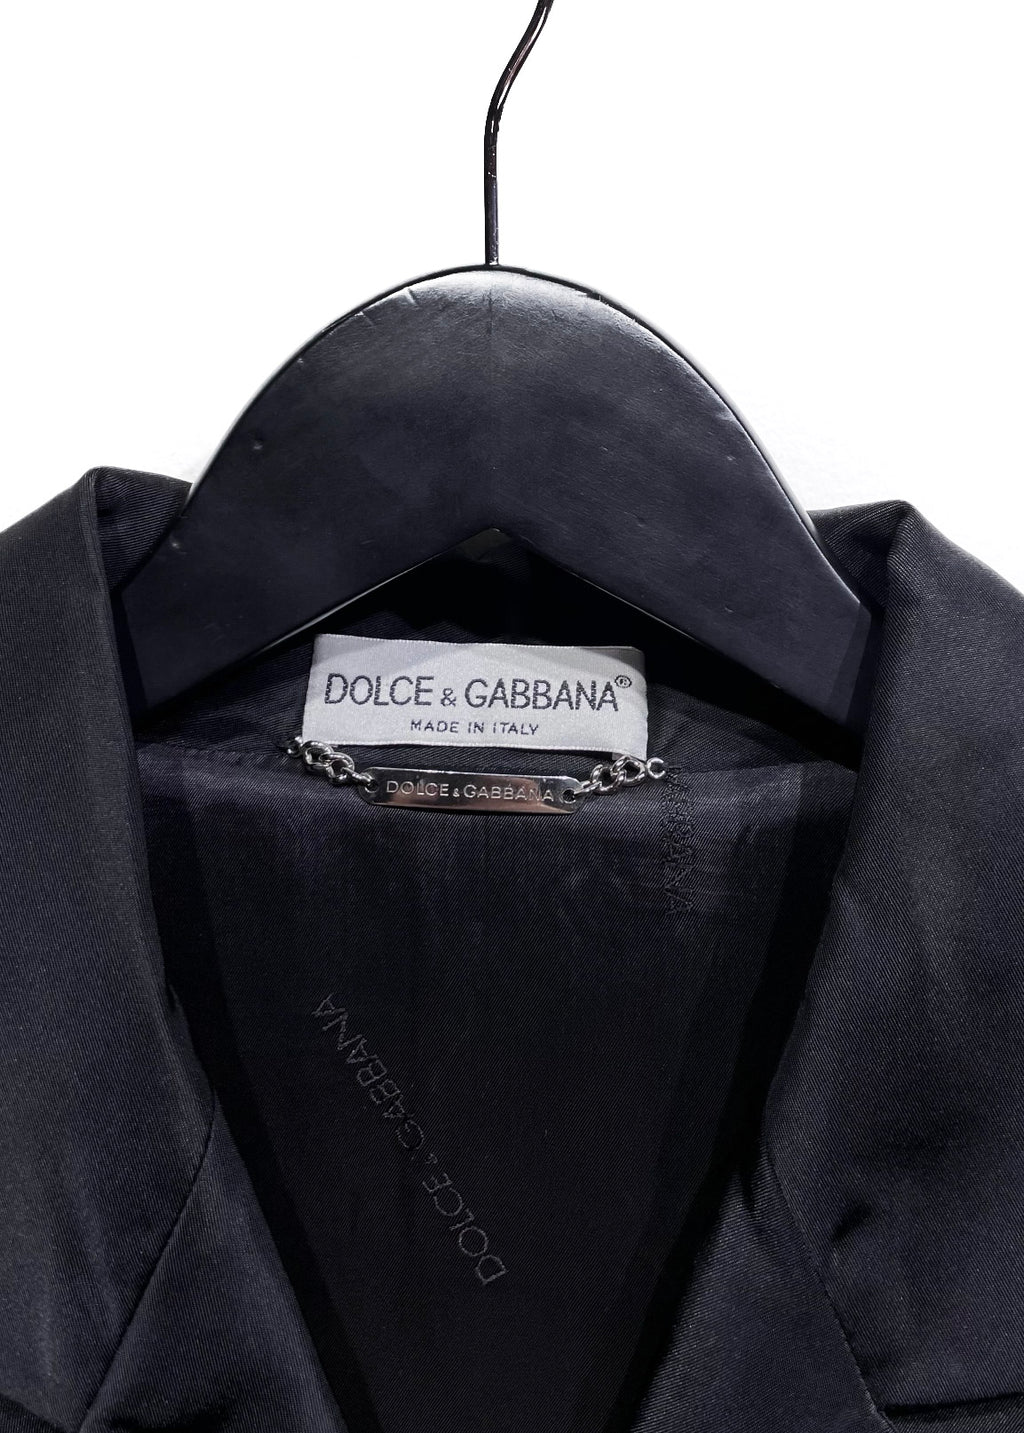 Dolce & Gabbana Vintage Black Satin Blazer